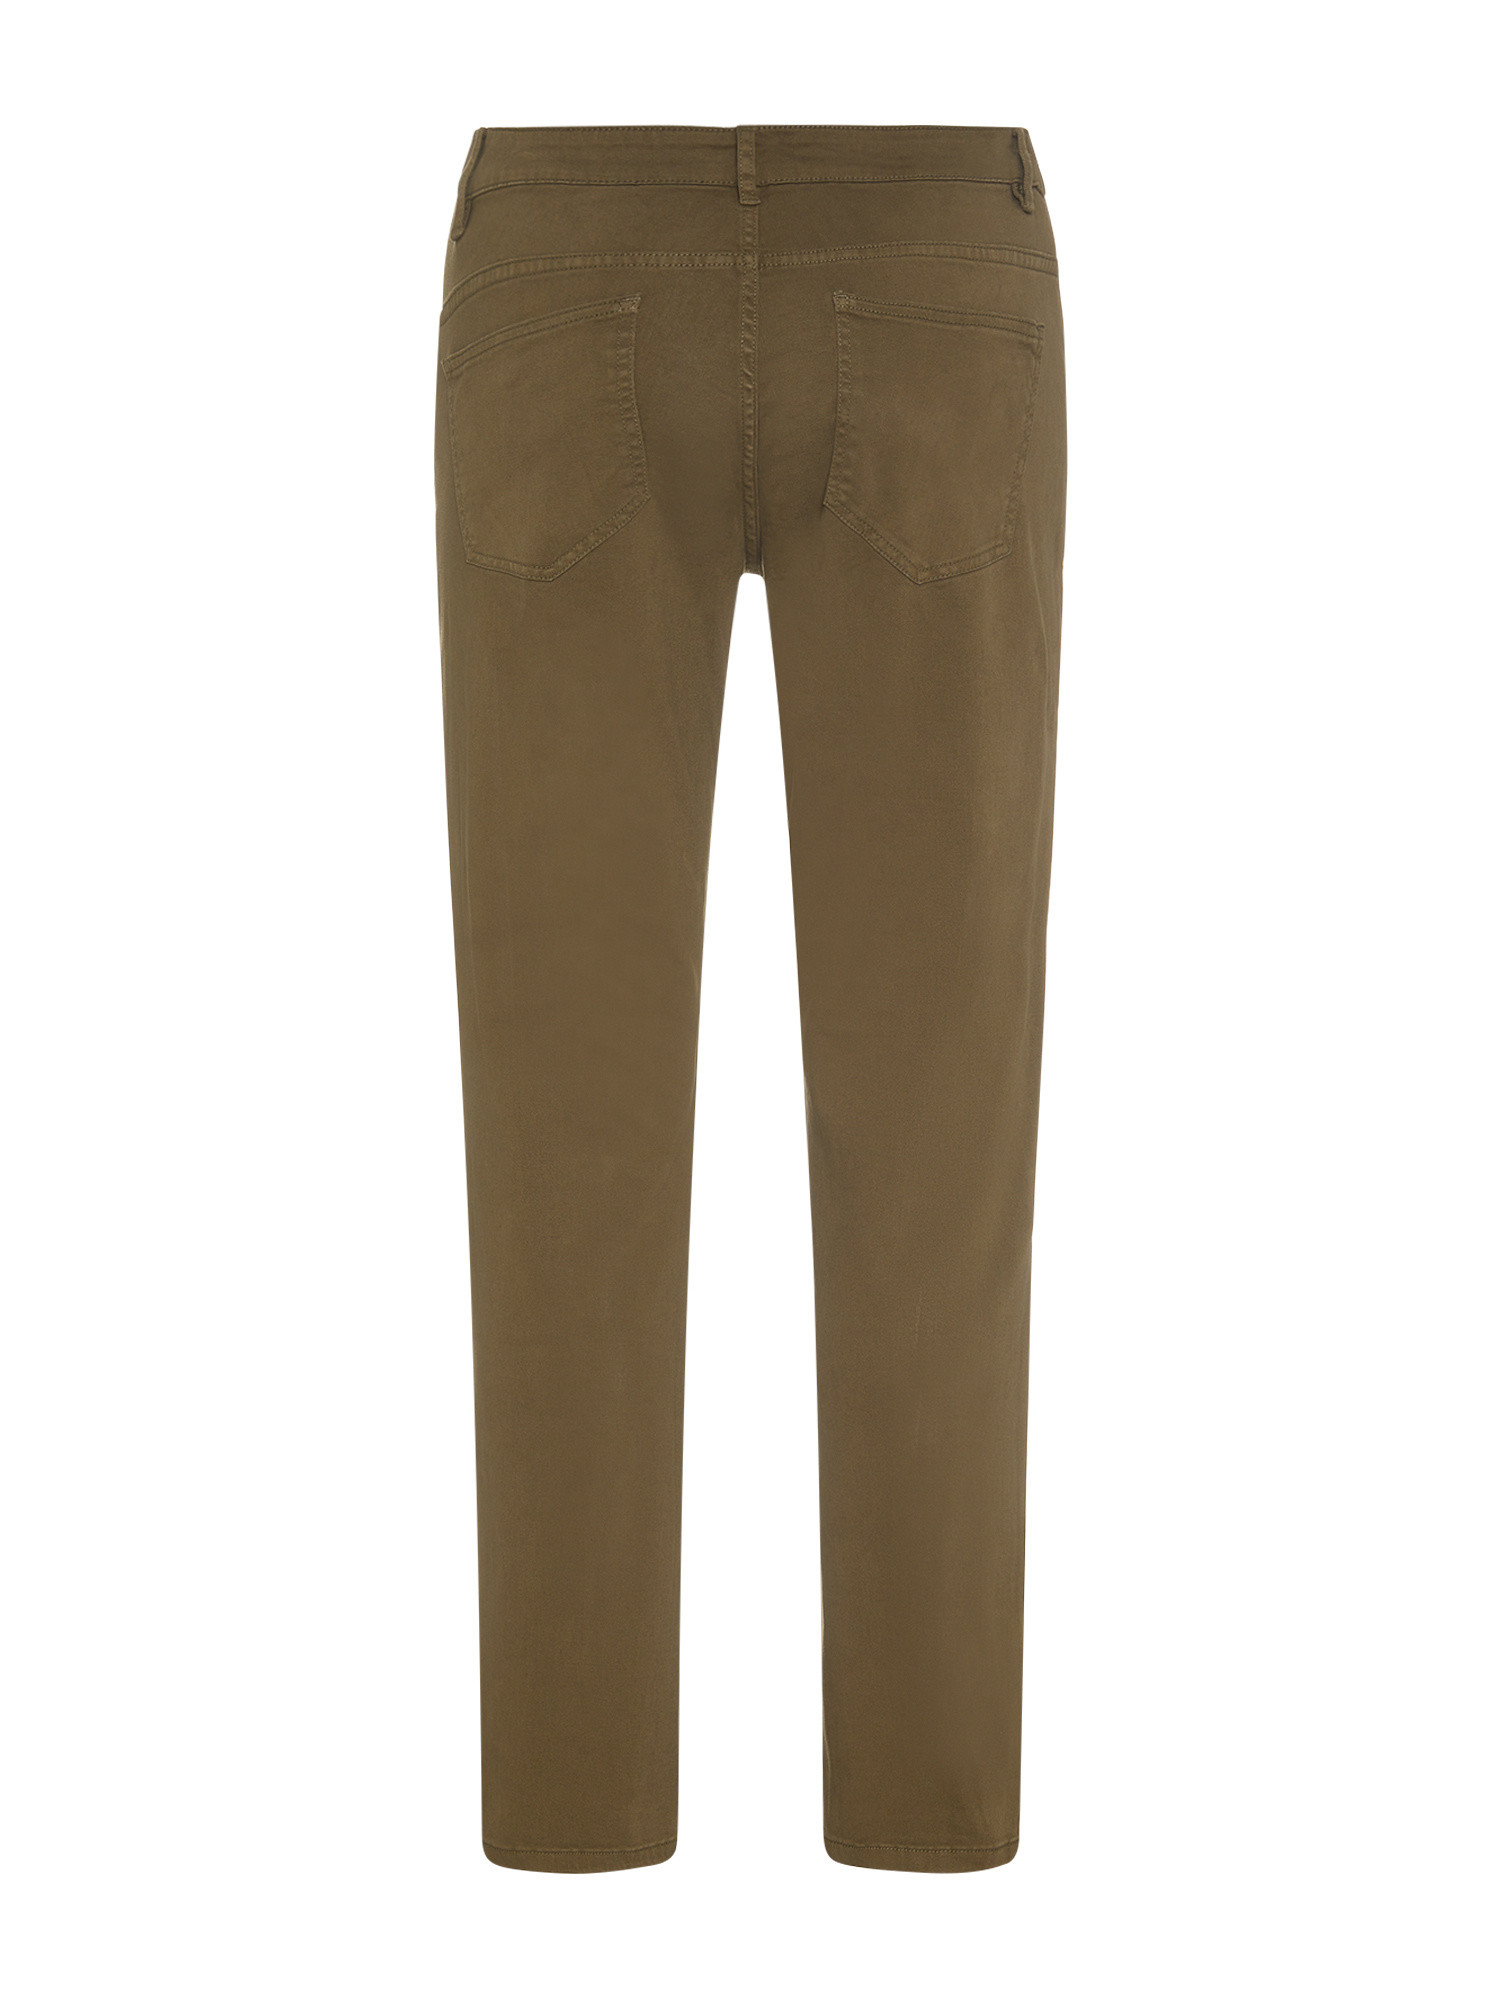 JCT - Slim fit five pocket trousers, Green, large image number 1